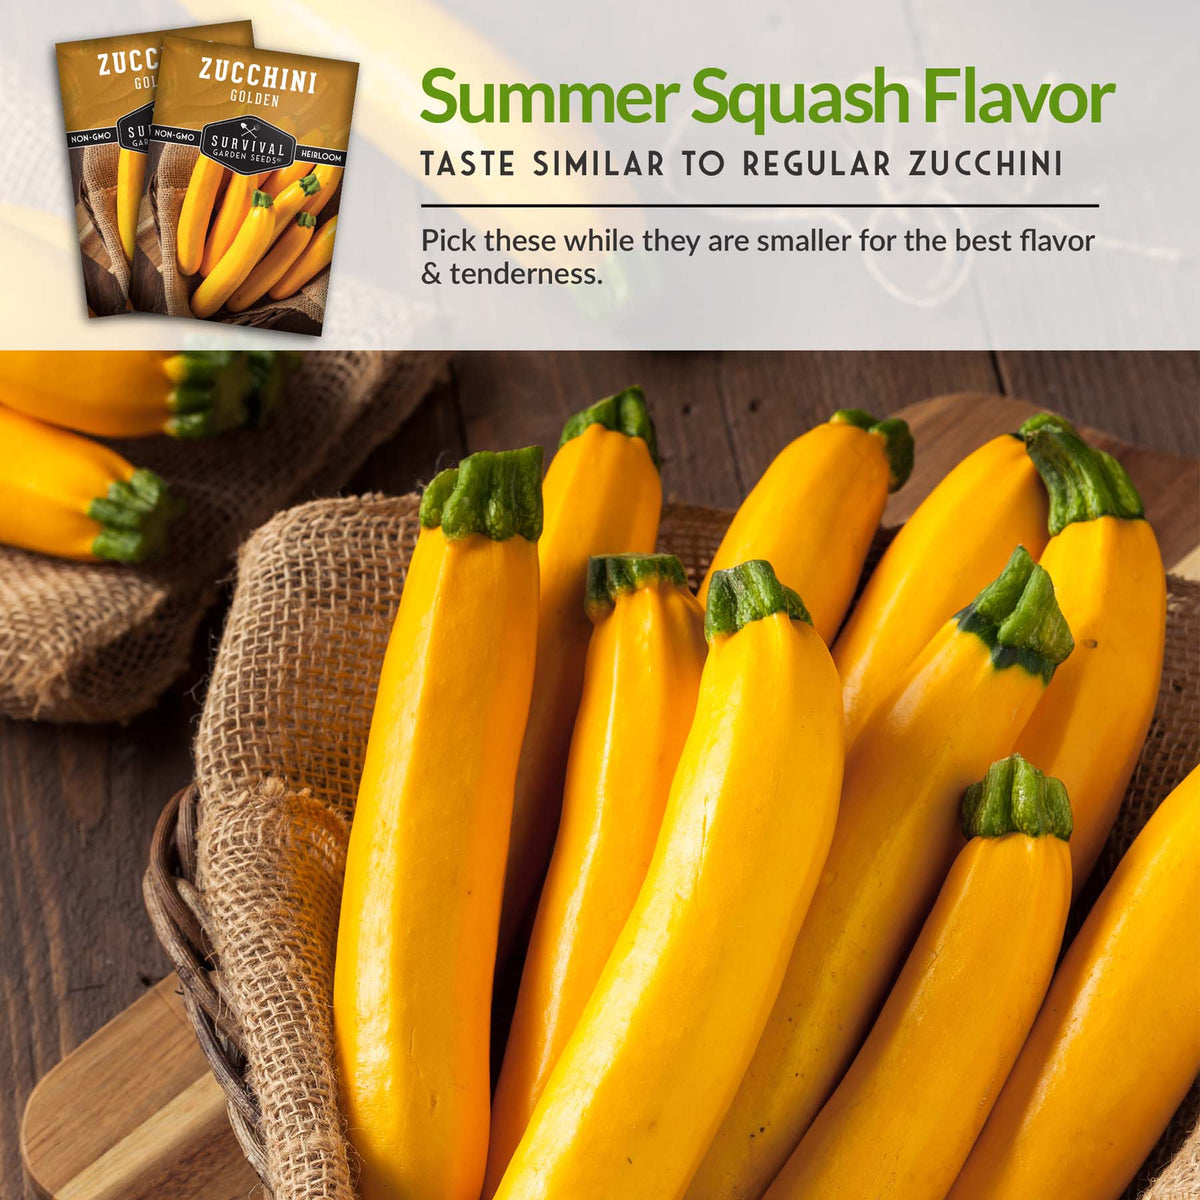 Golden Zucchini have a summer squash flavor